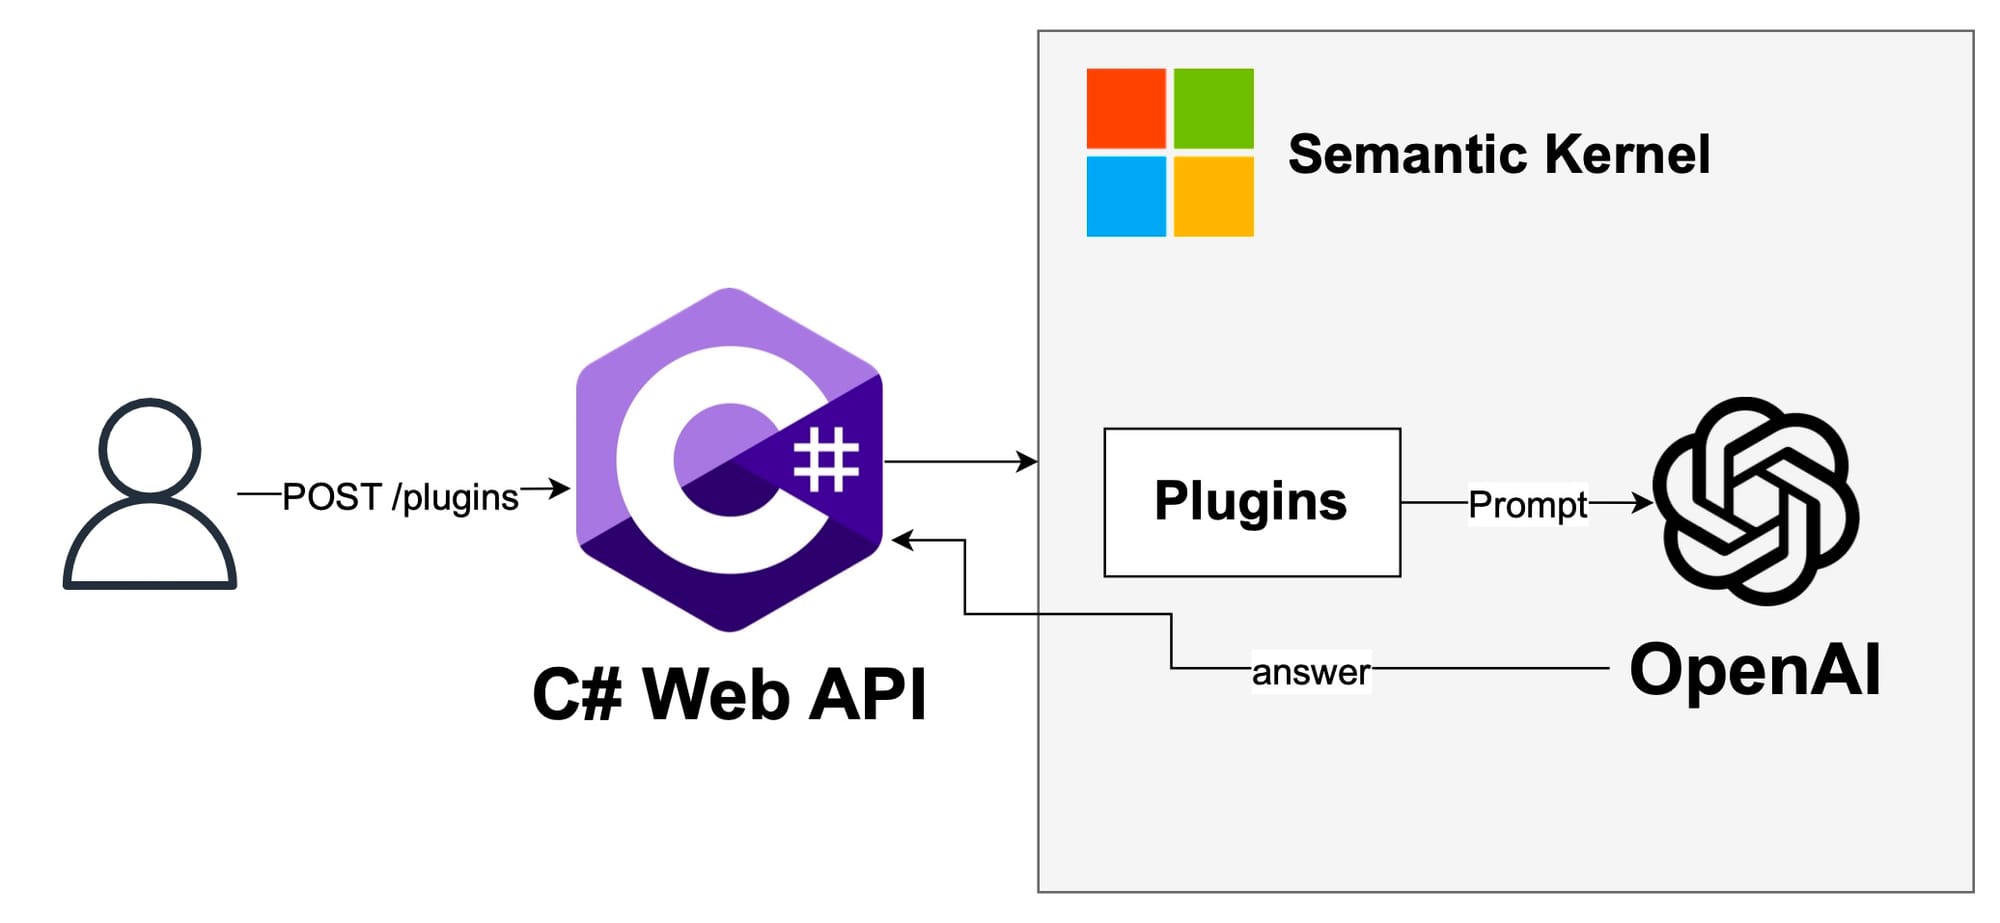 Semantic Kernel with C# minimal API